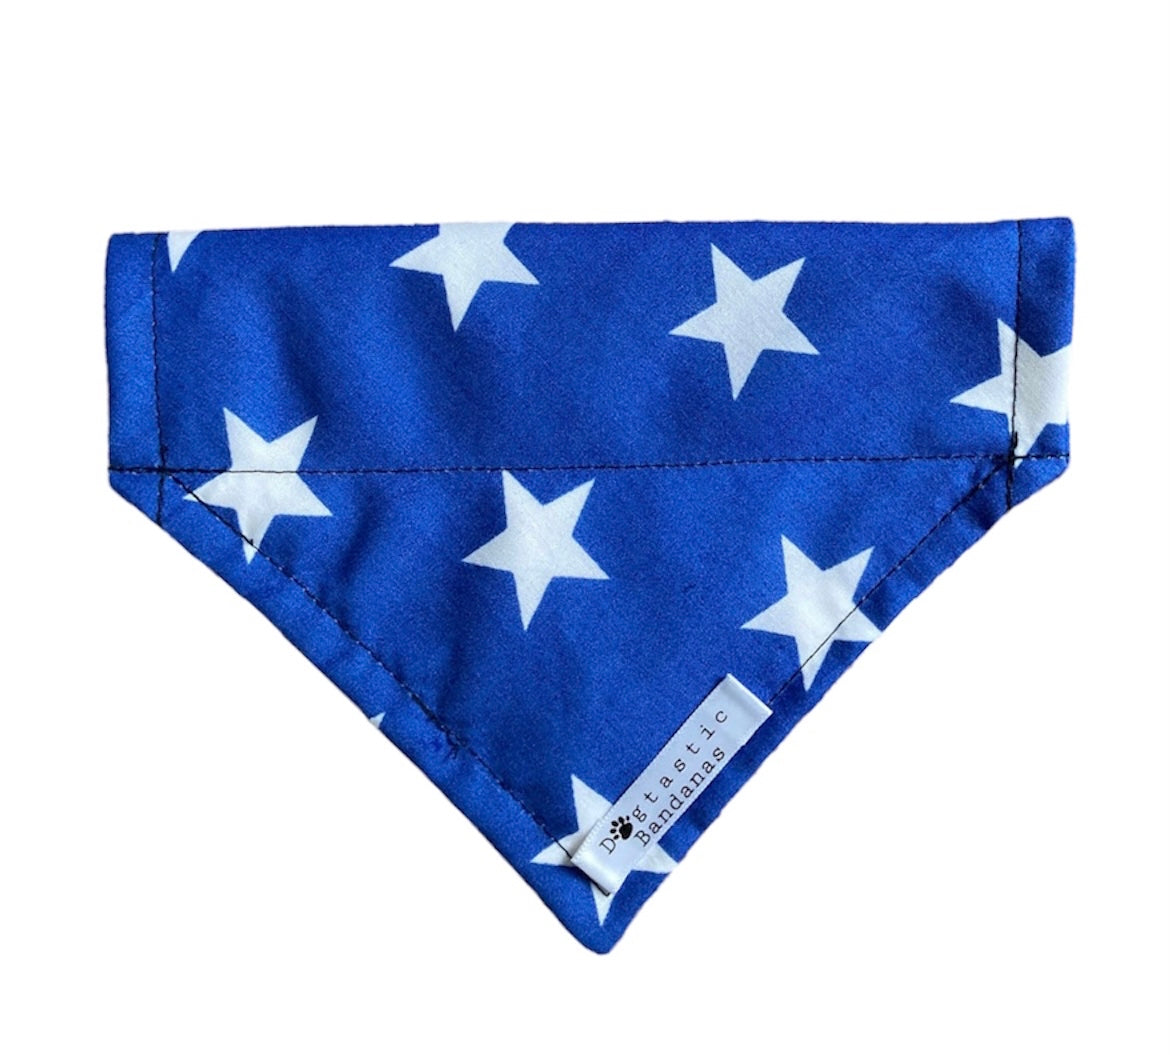 Blue star dog/pet bandana